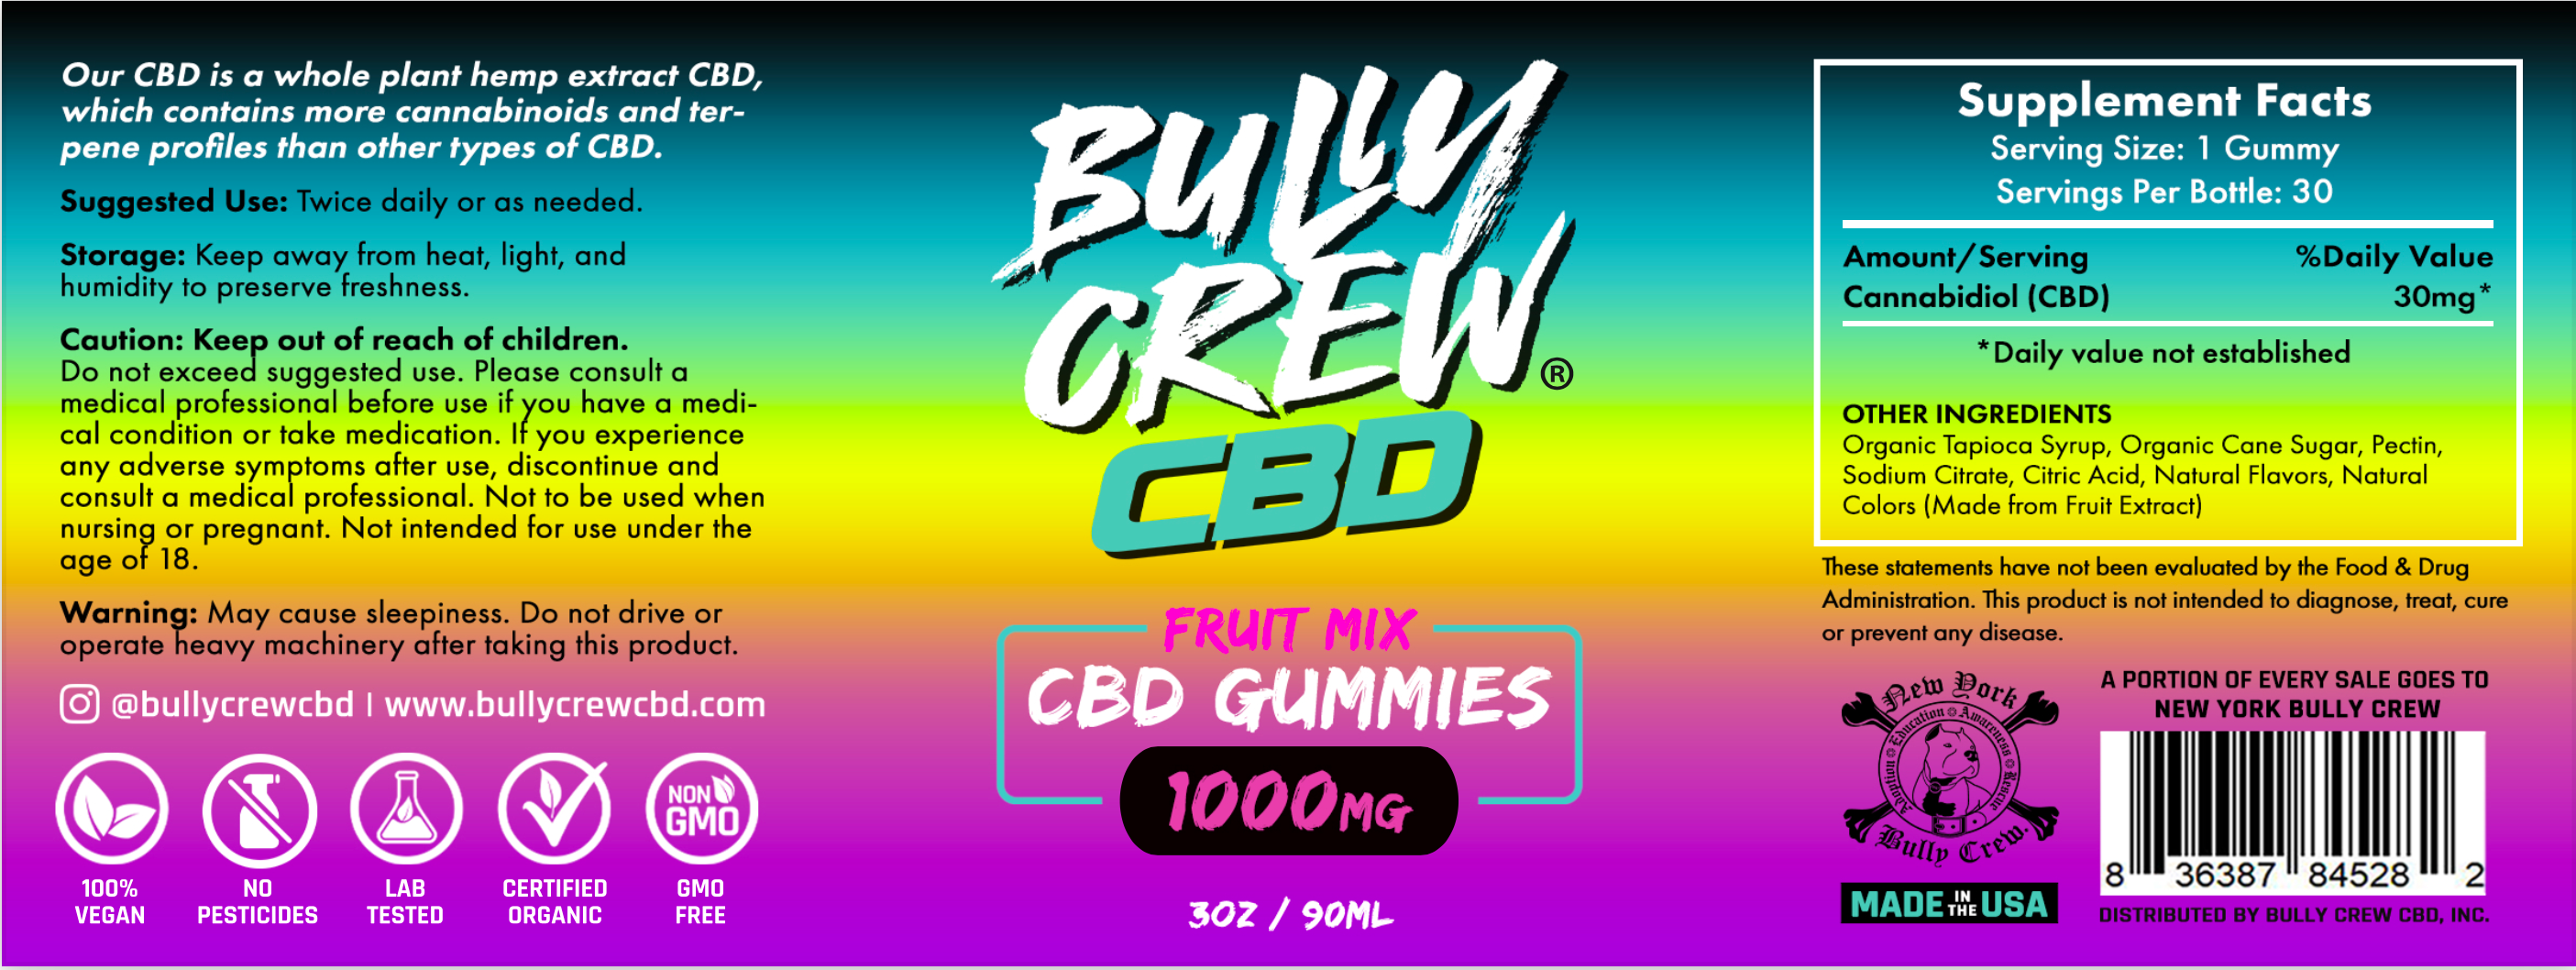 1000mg CBD Gummies - 30 Count